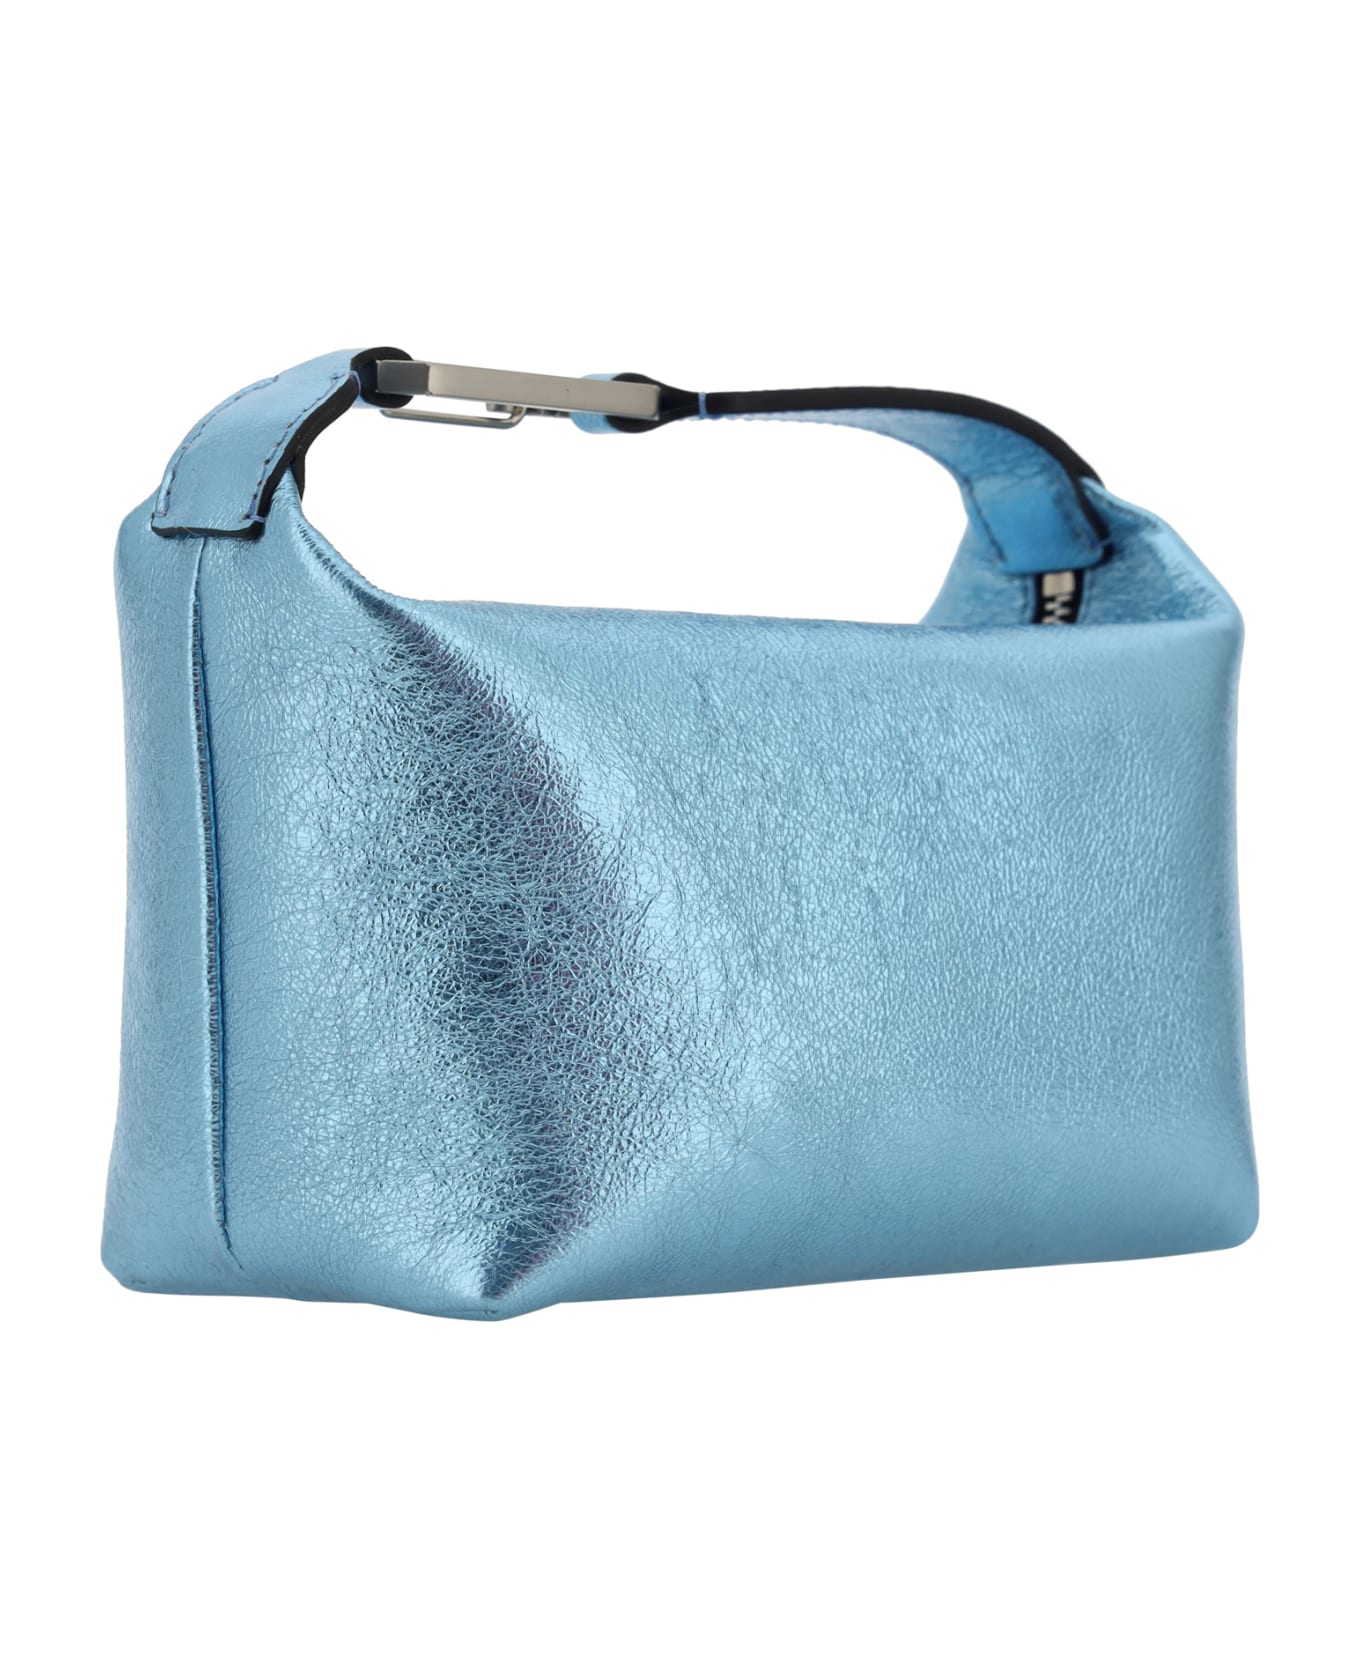 EÉRA Moon Handbag - Turquoise